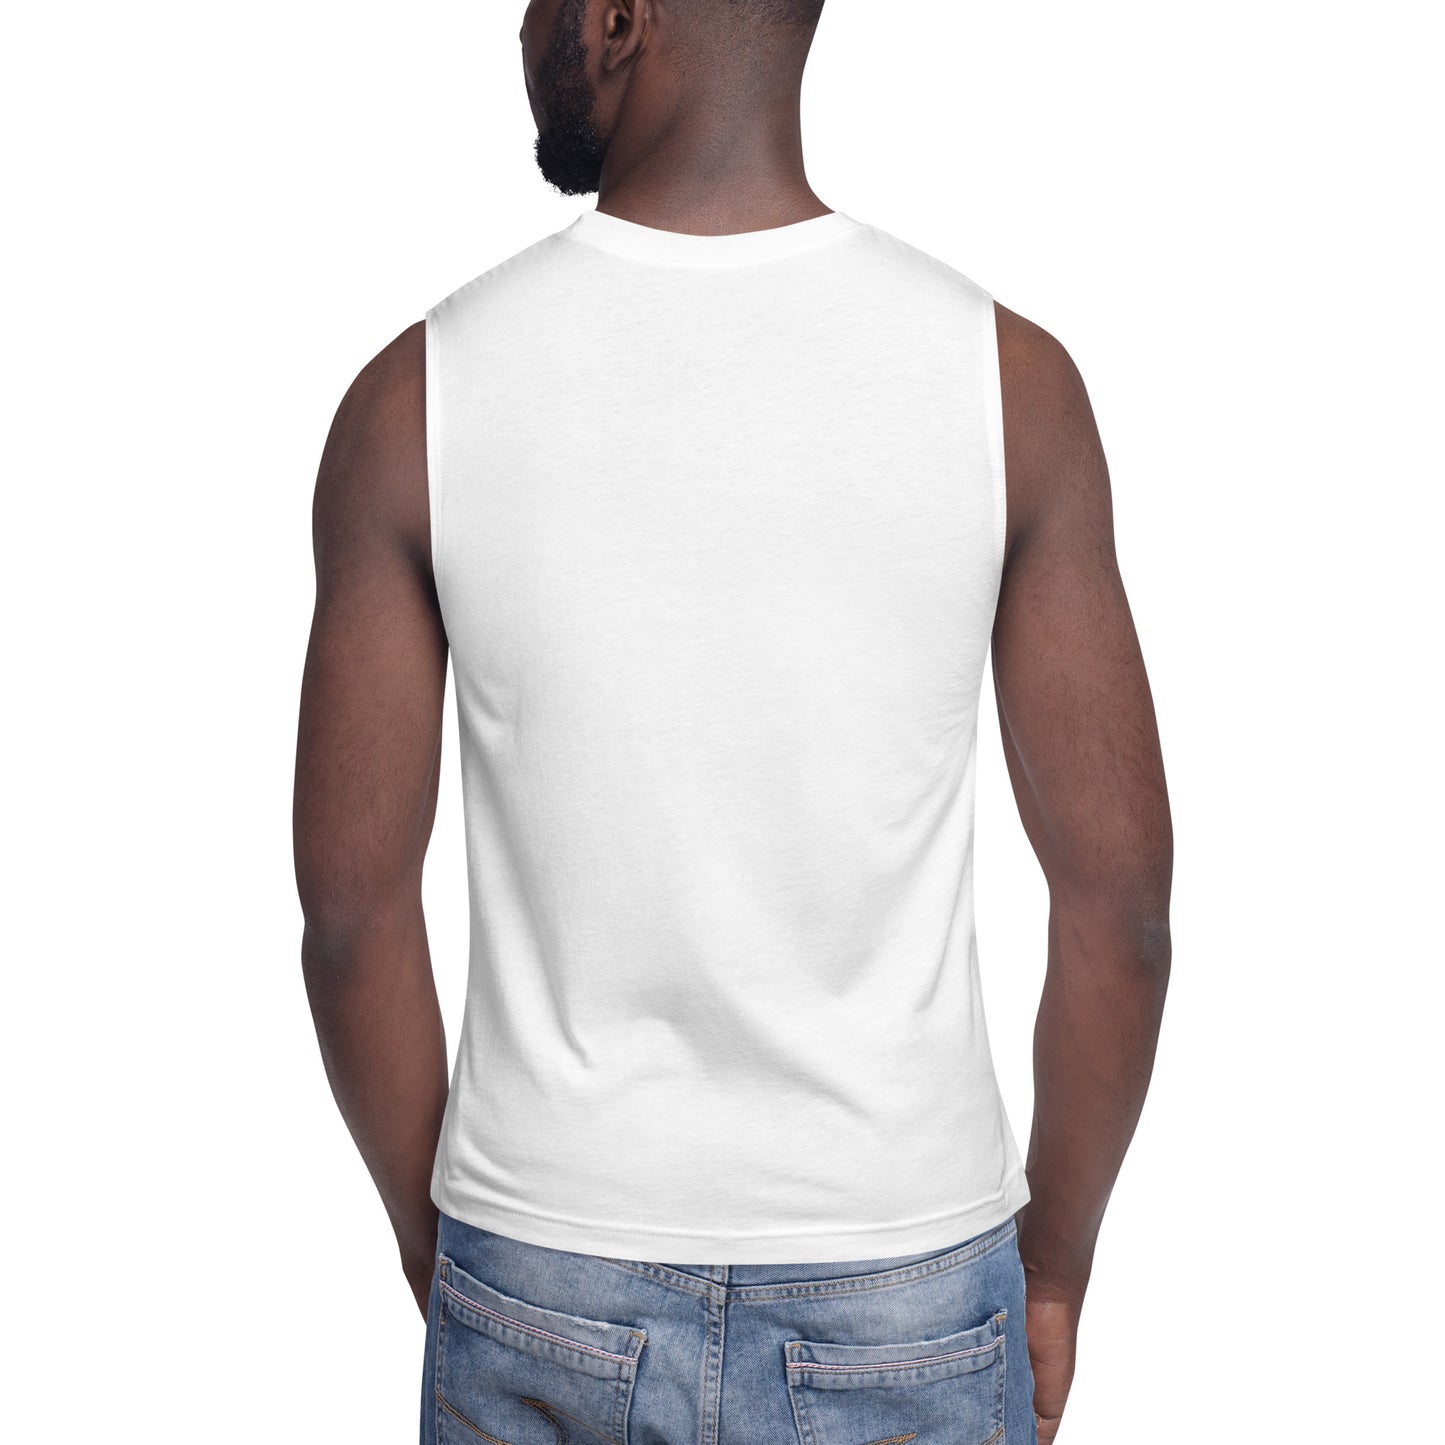 AFRICAN SAMURAI Muscle Shirt (White)